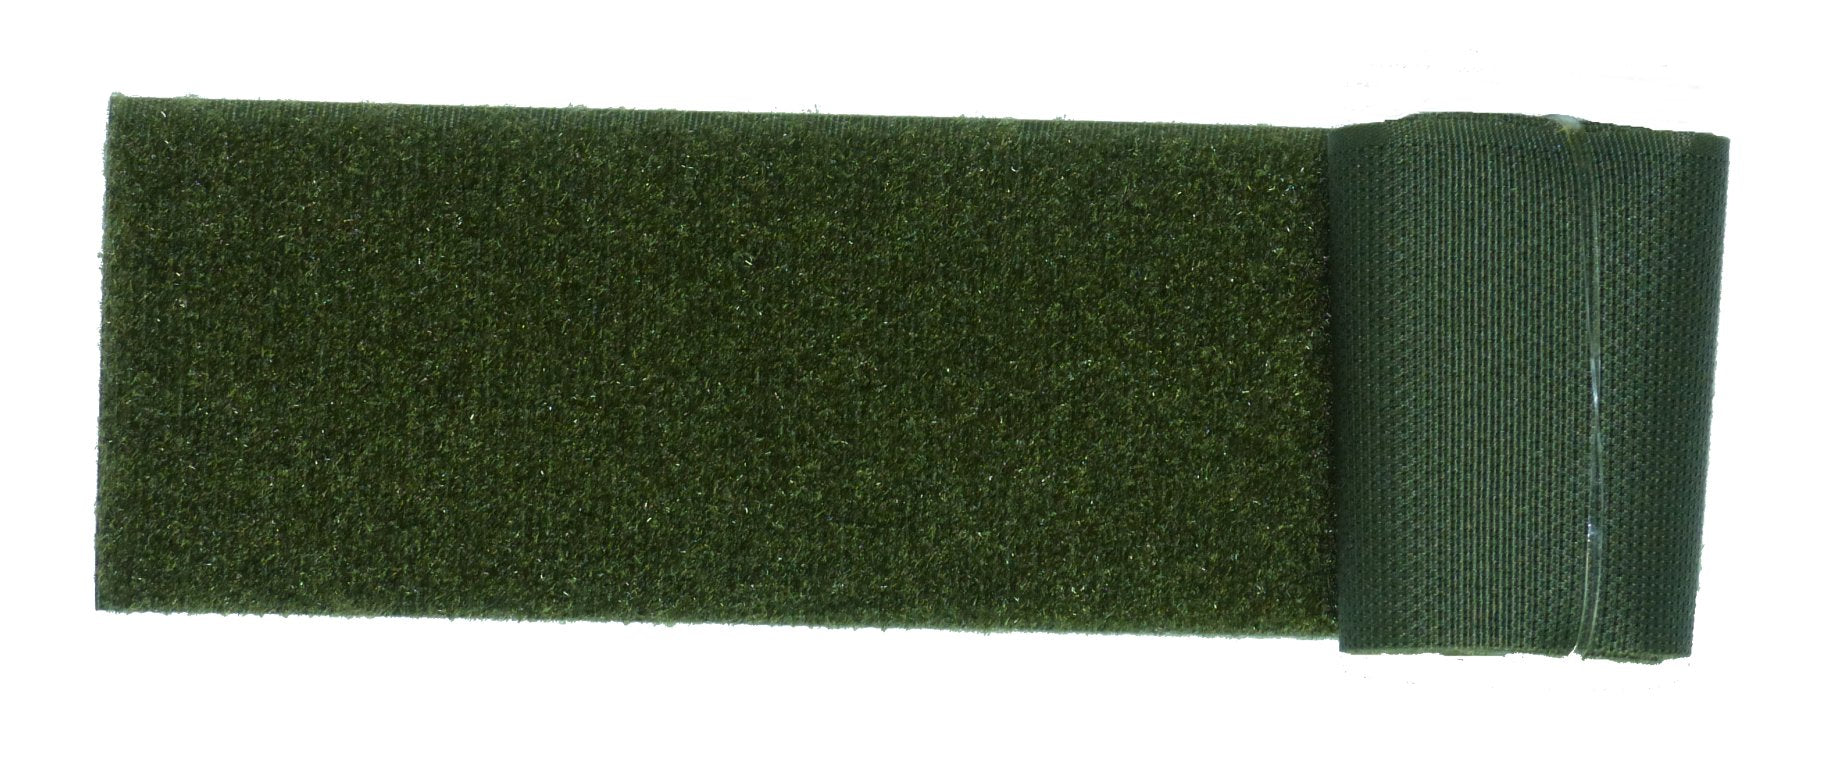 Benristraps 50mm sewable loop tape in green